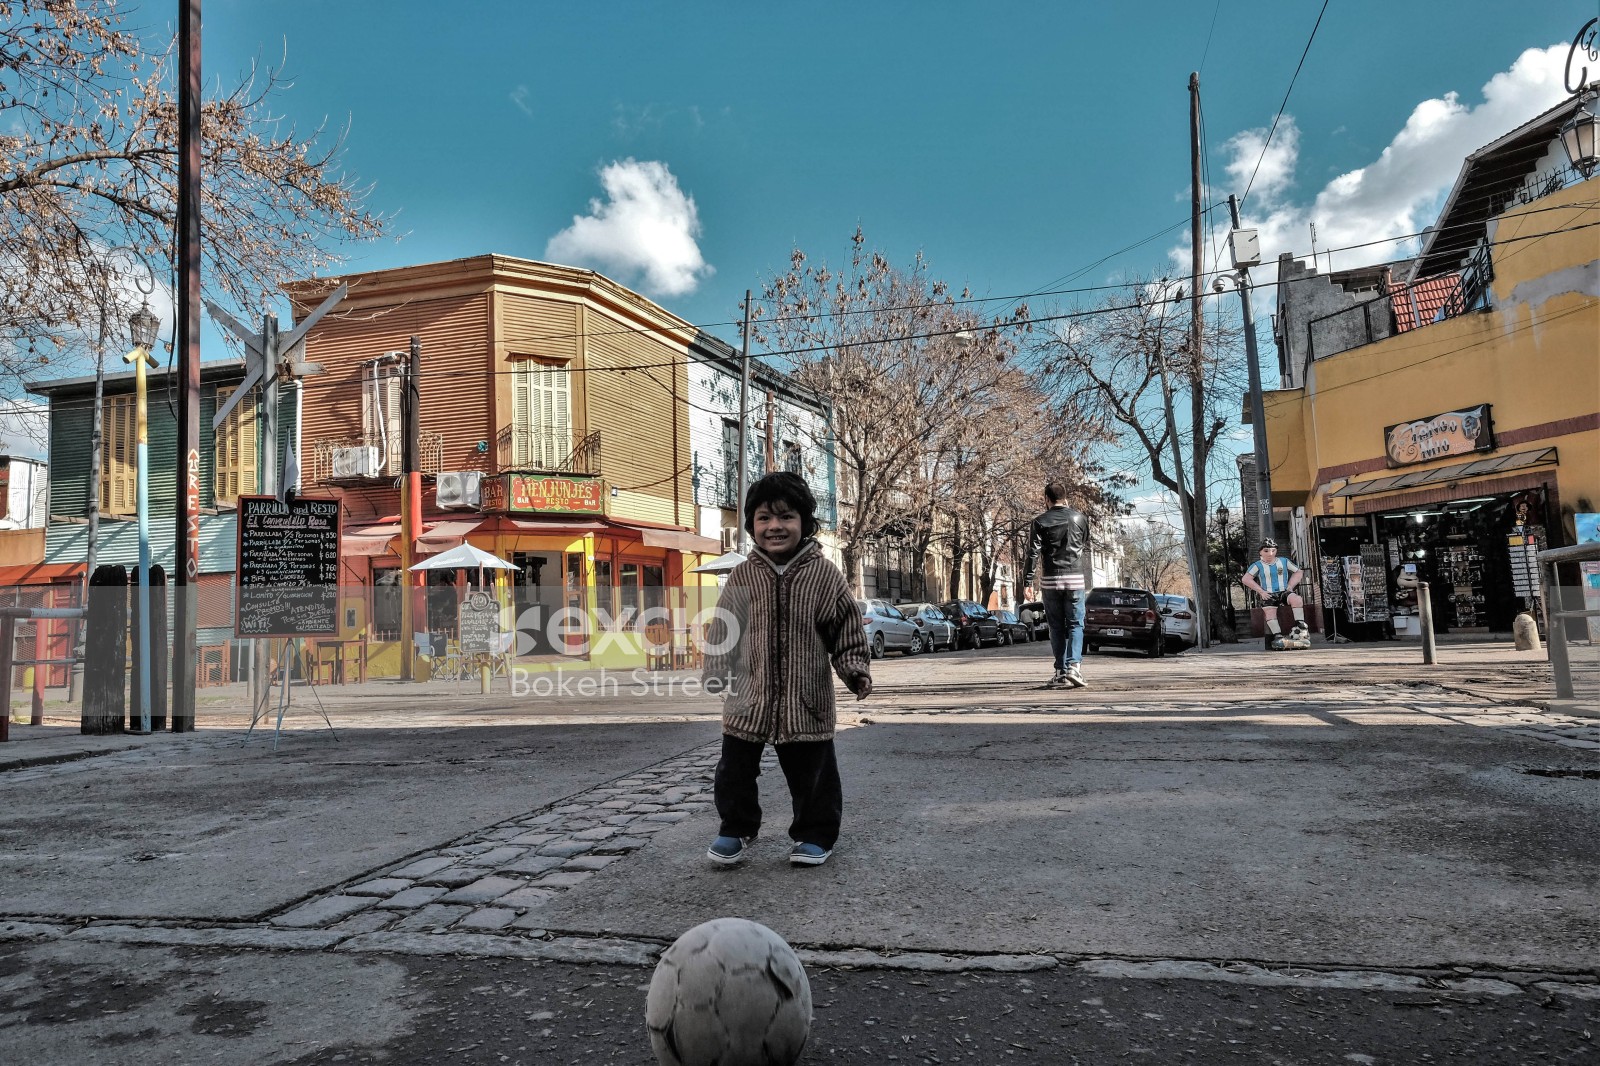 Kid playing football in the street Maradona statue